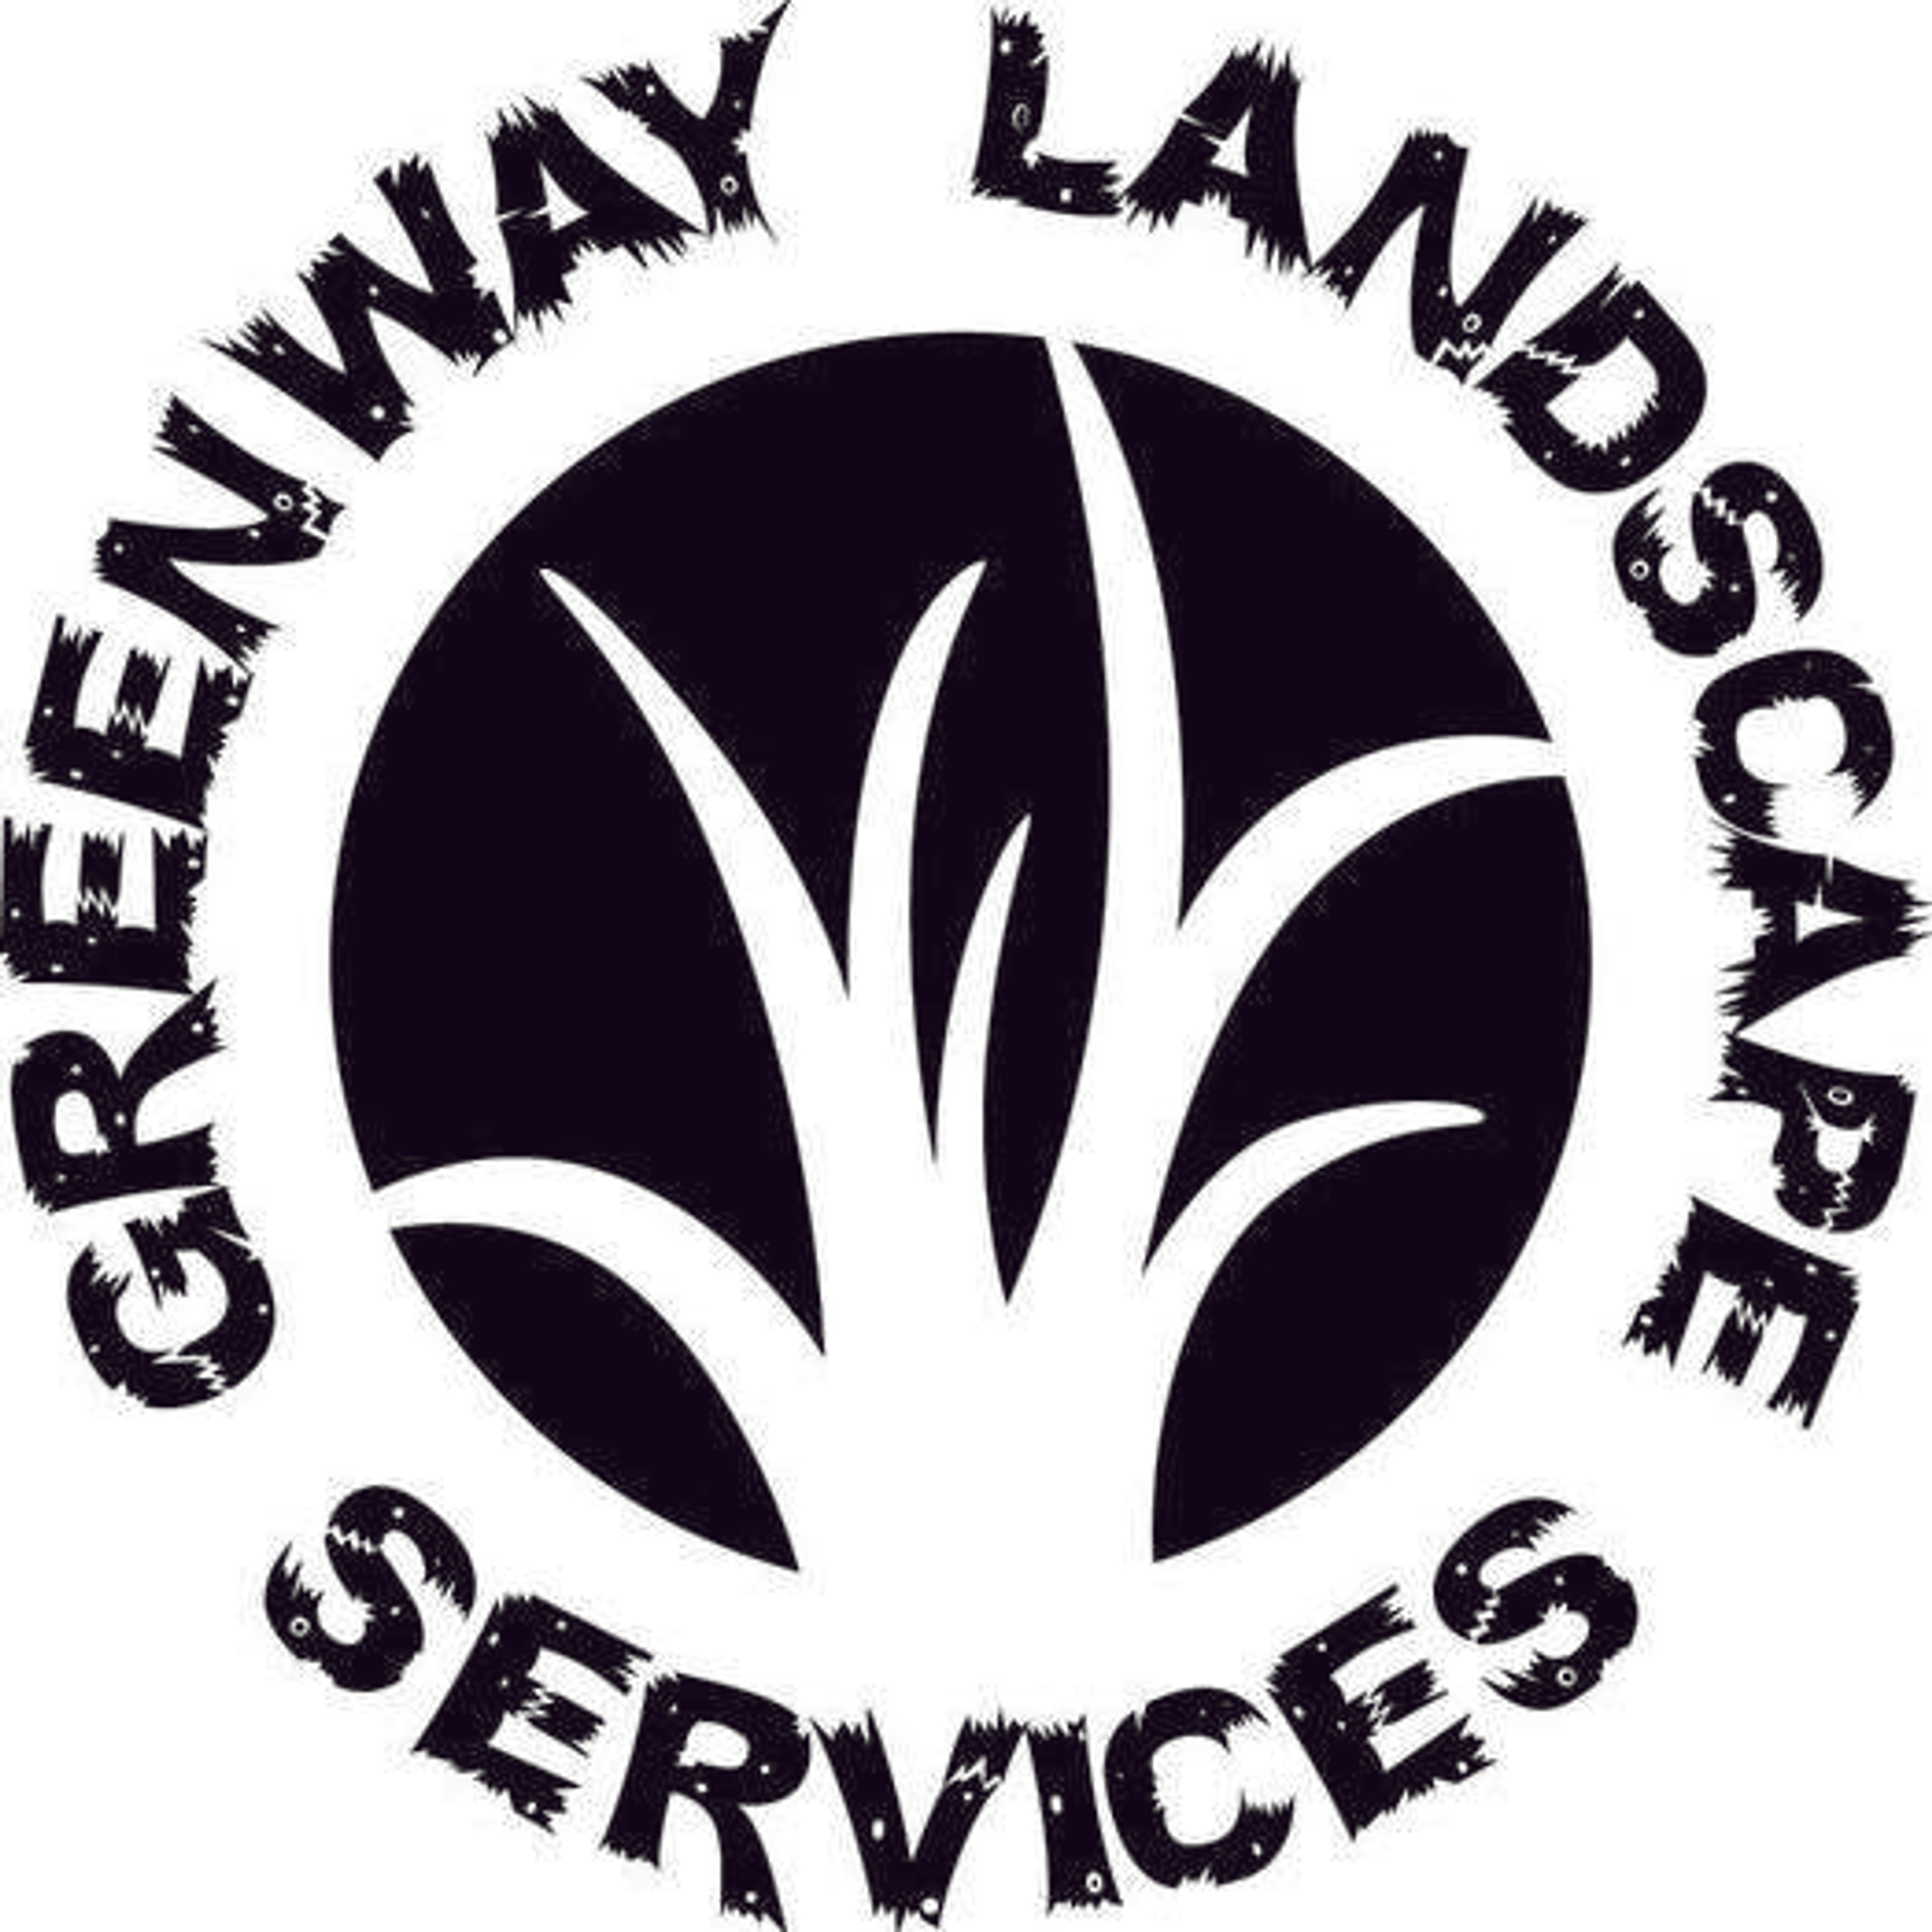 Lawn Care / Landscape Member Needed